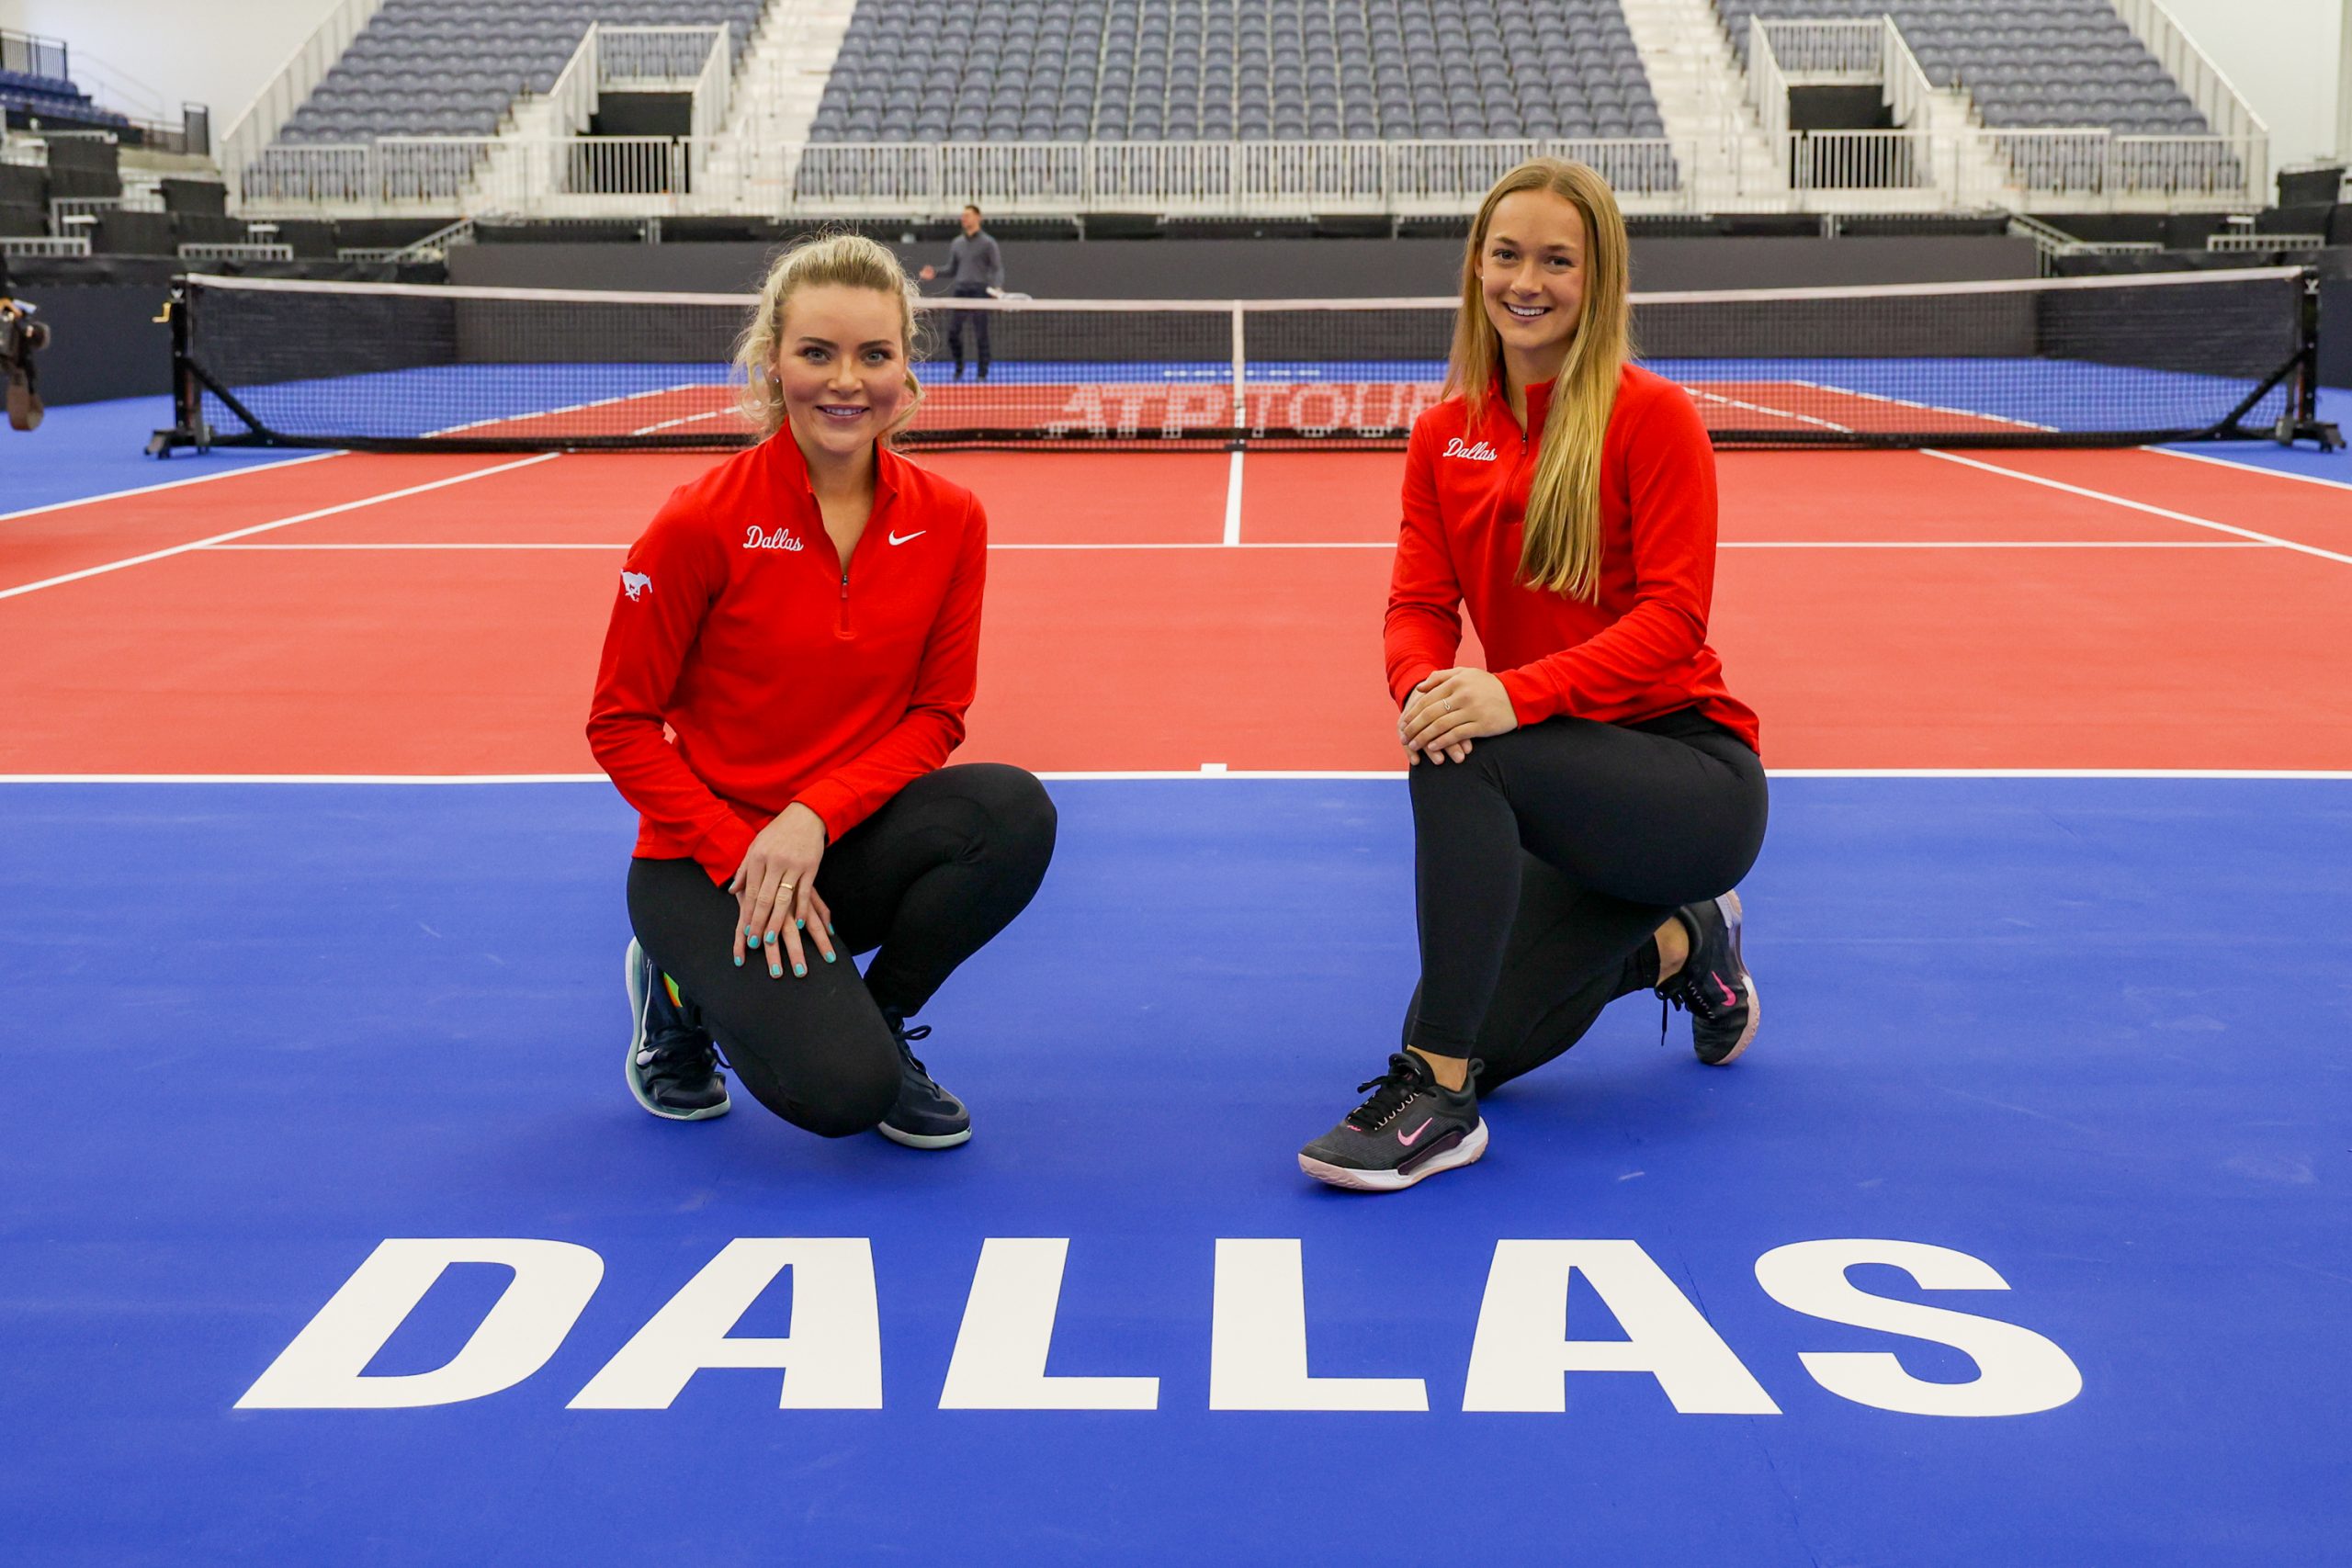 Dallas Open Hosts Women's Tennis Classic